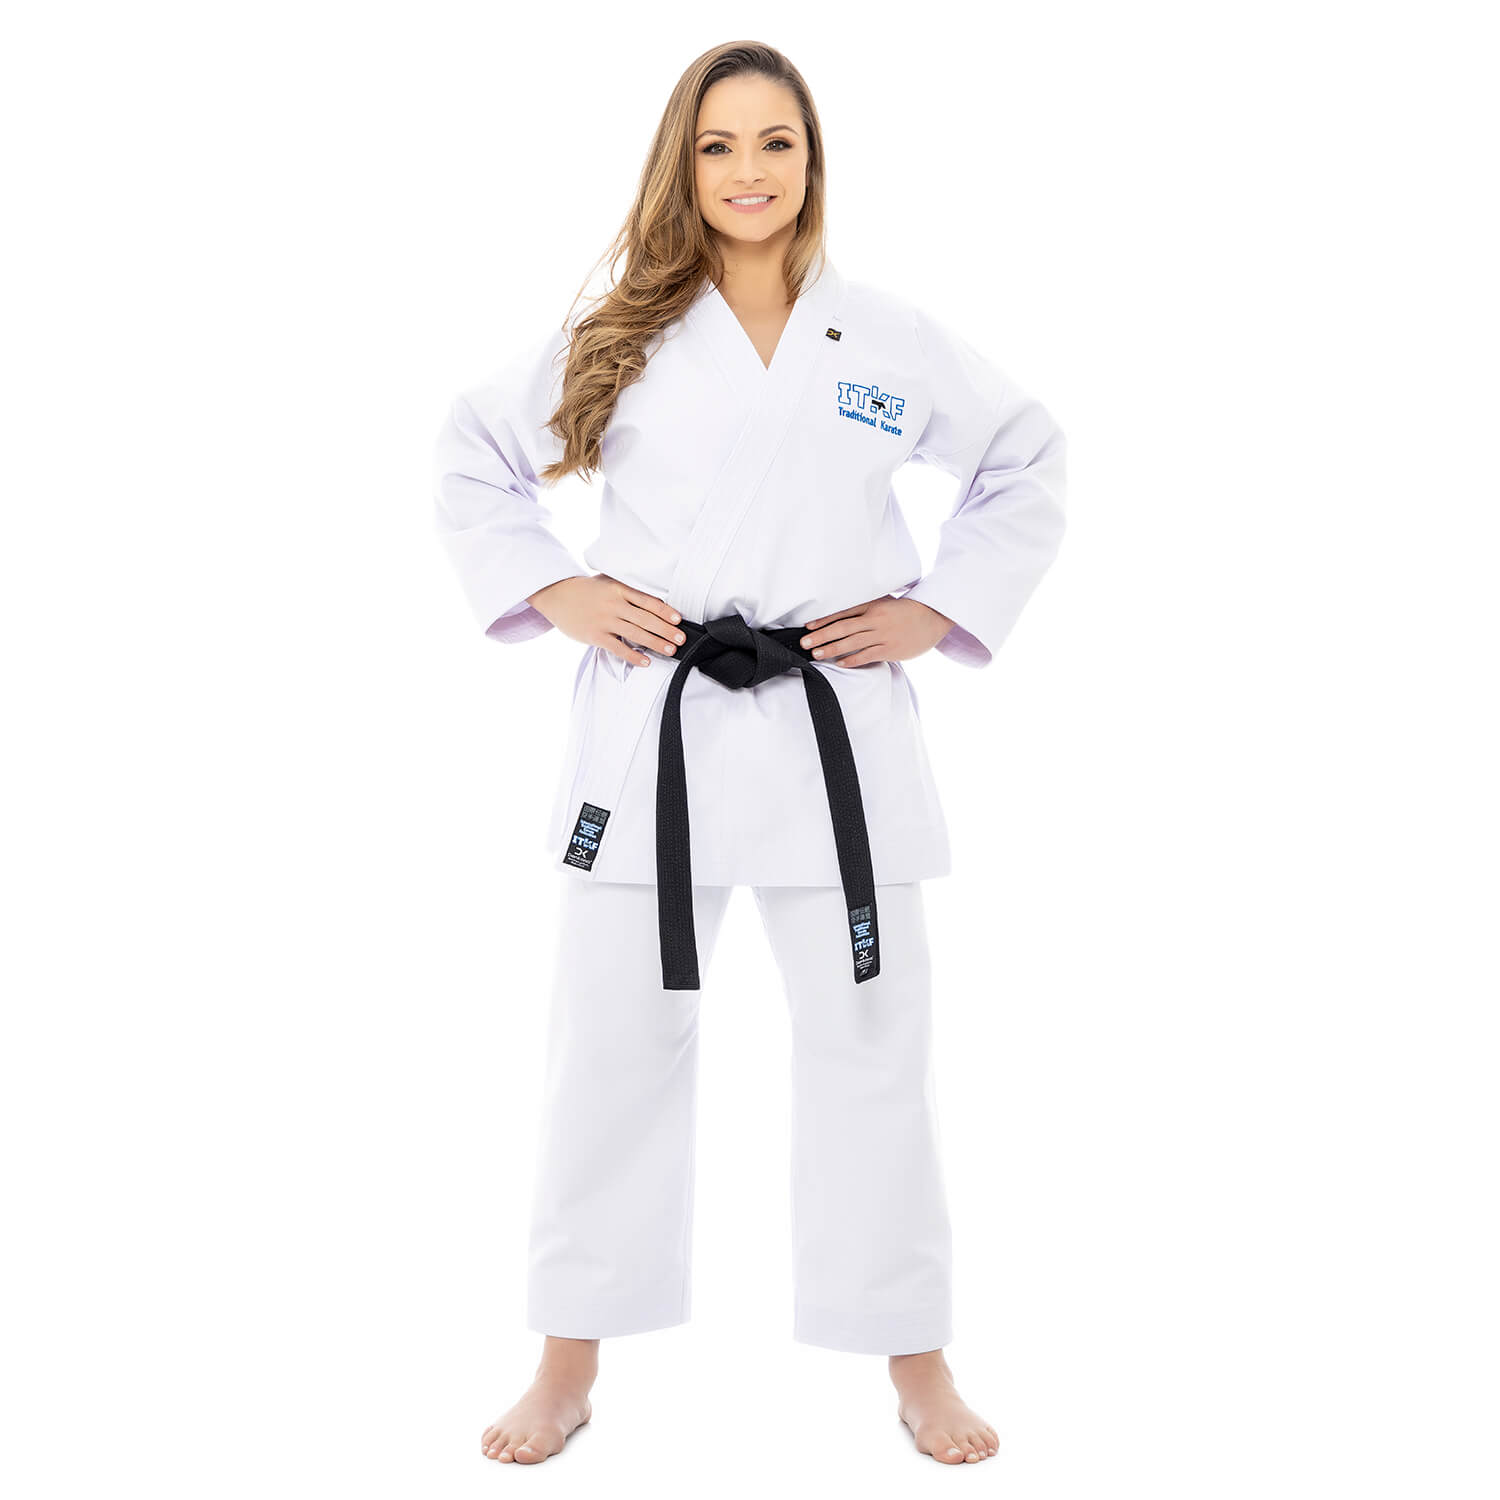 Karate-gi Premium ITKF